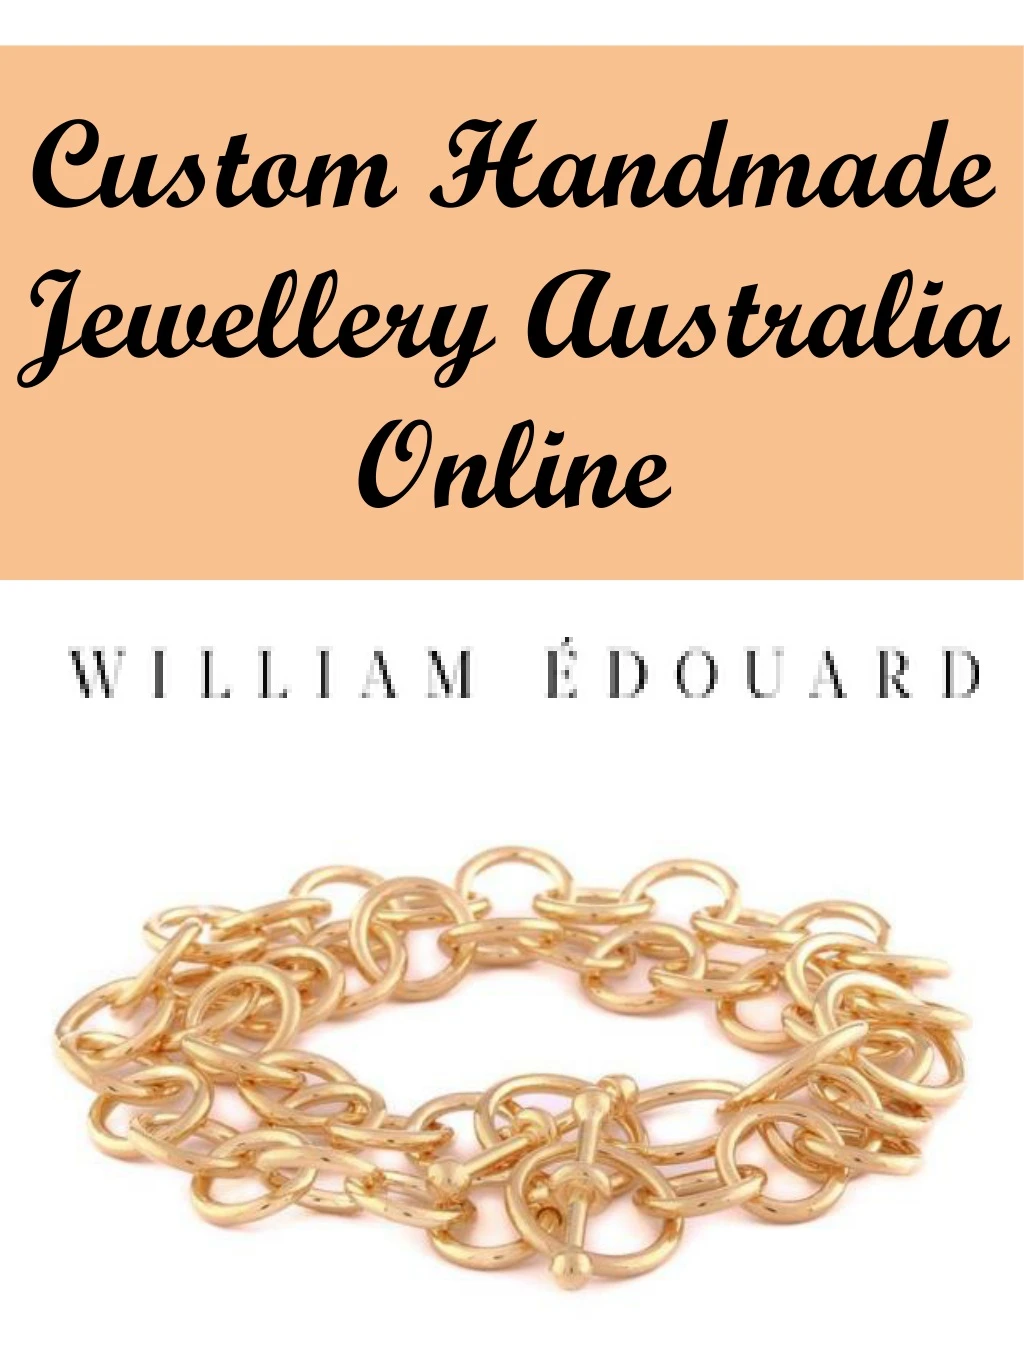 custom handmade jewellery australia online